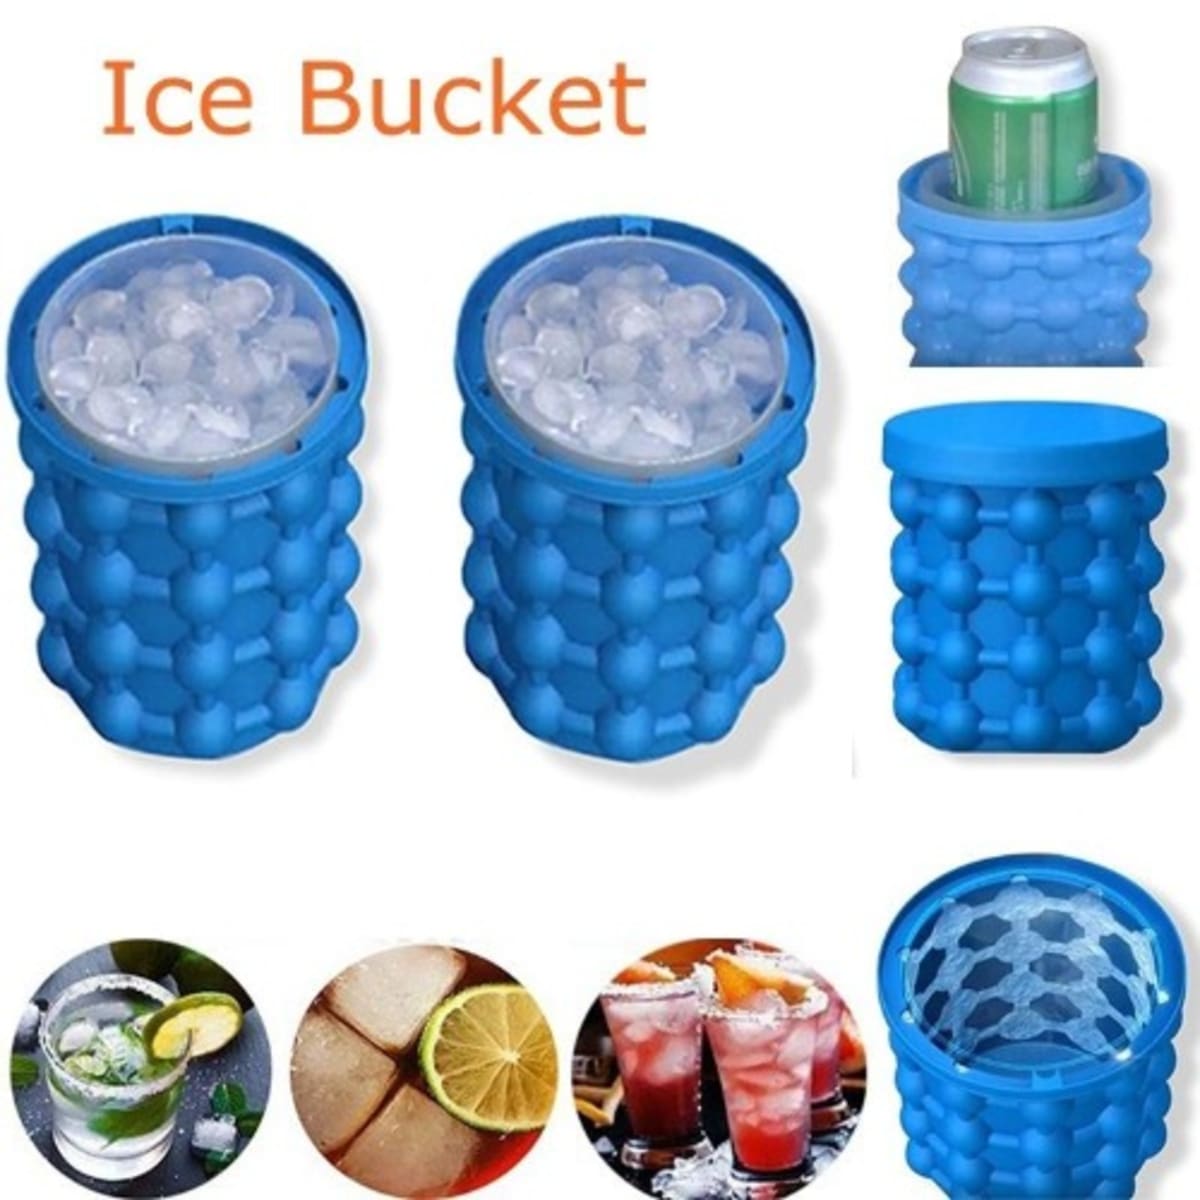 Ice Cube Maker Genie Silicone Ice bucket